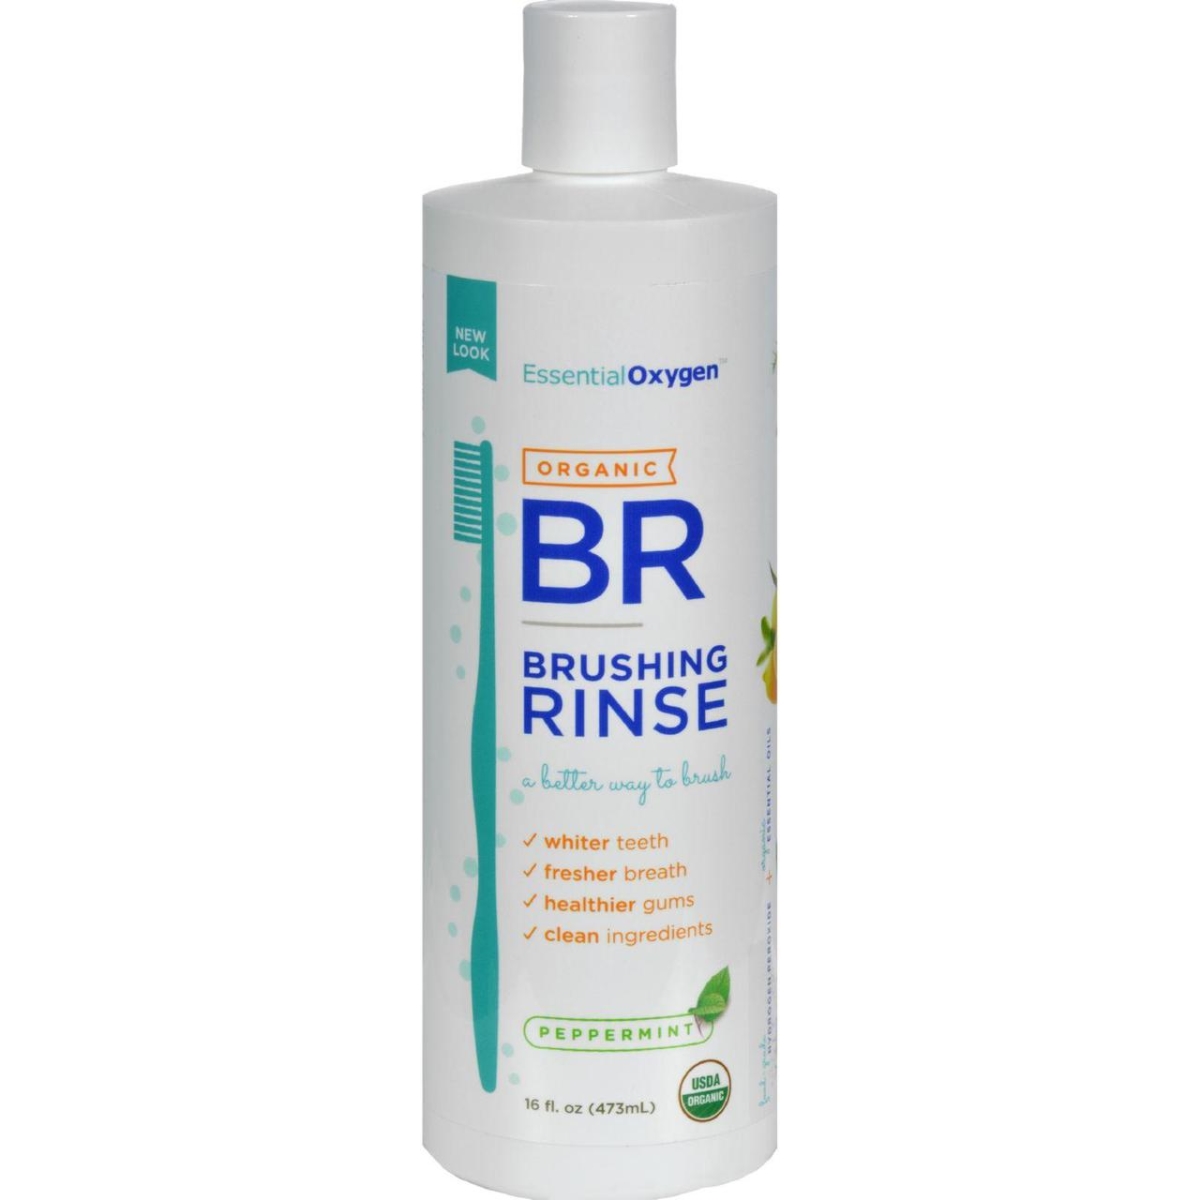 Hg0565820 16 Fl Oz Organic Brushing Rinse, Peppermint